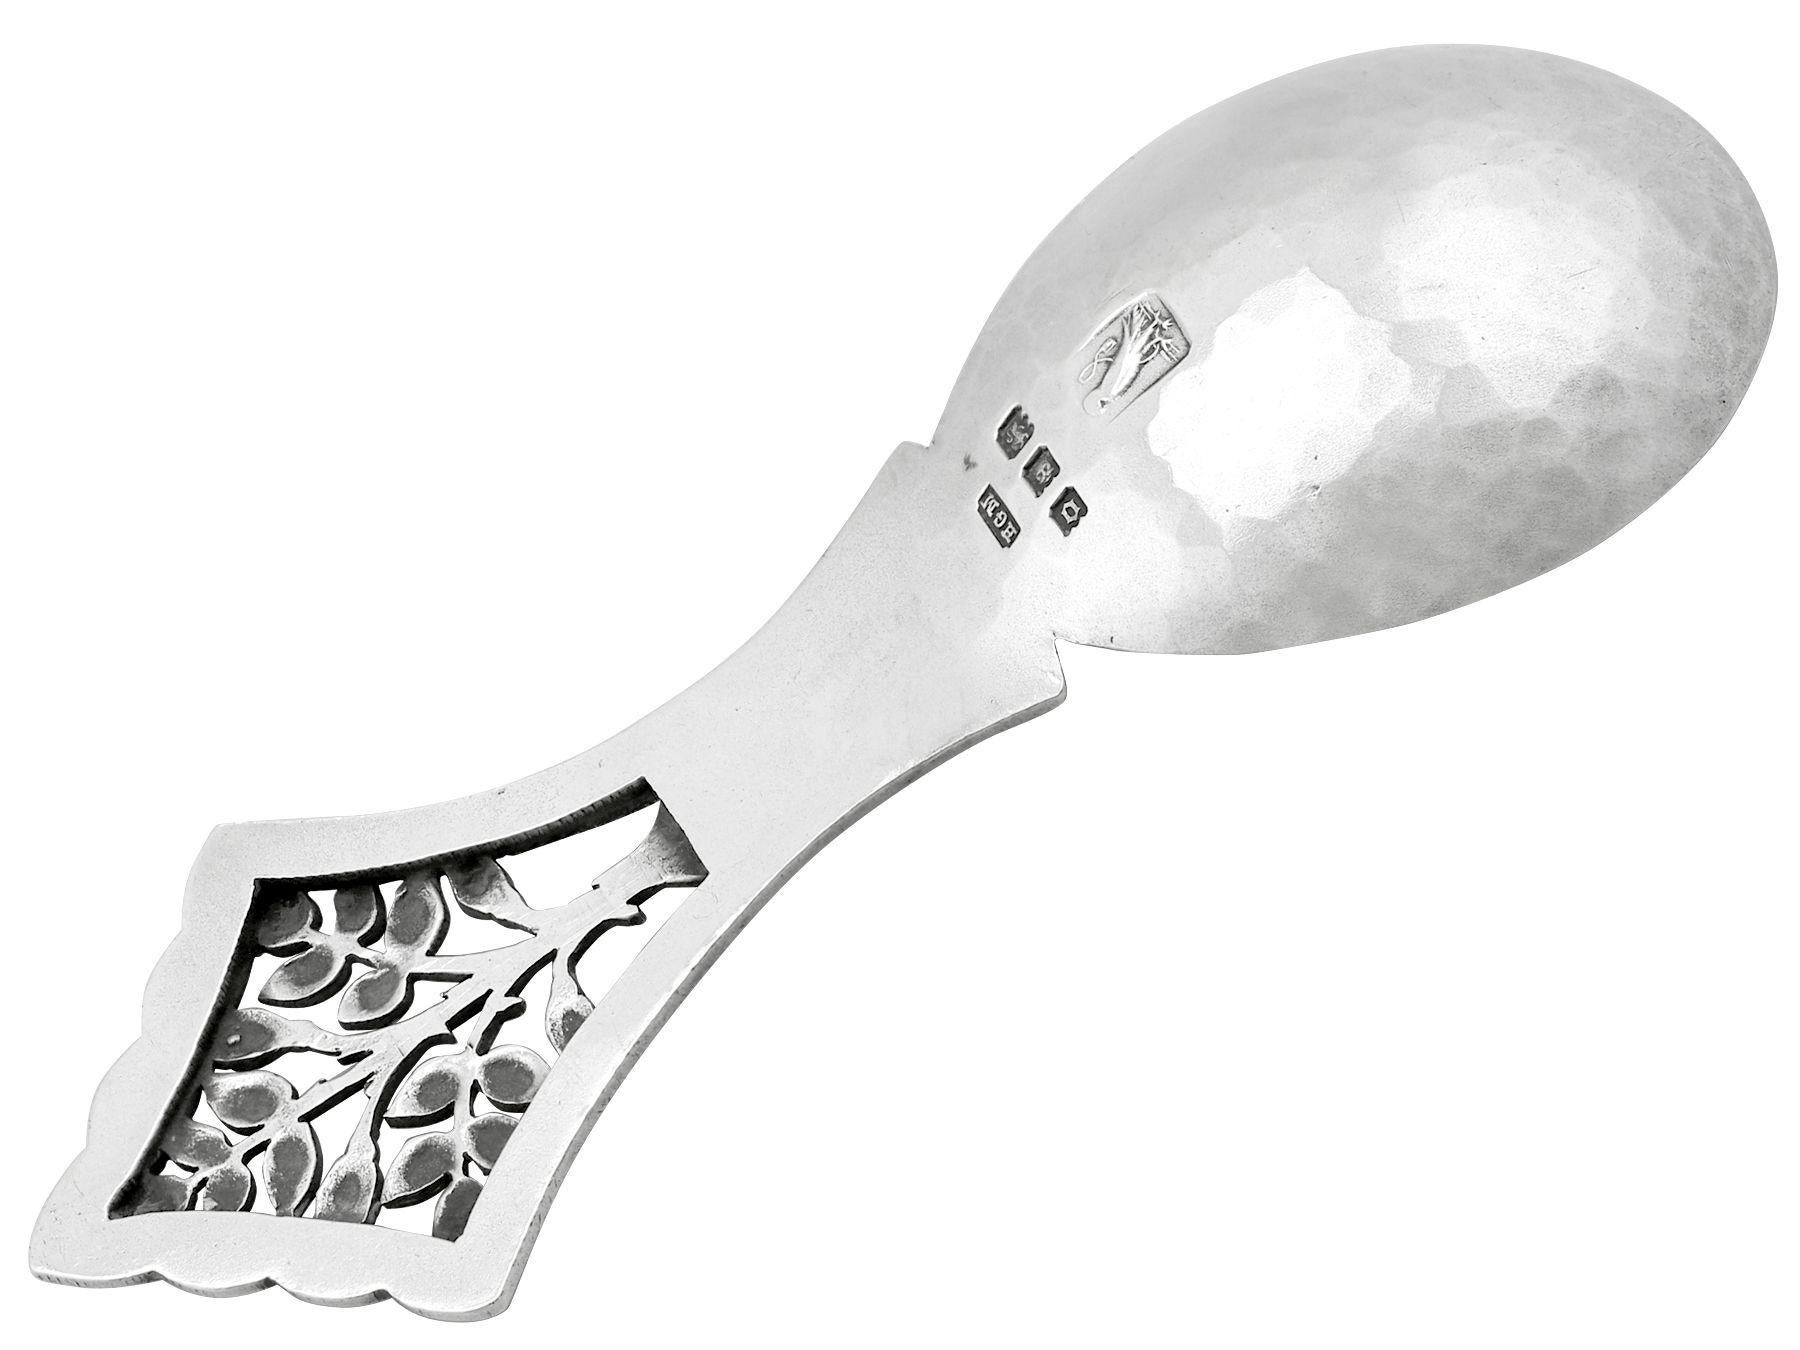 antique double spoon